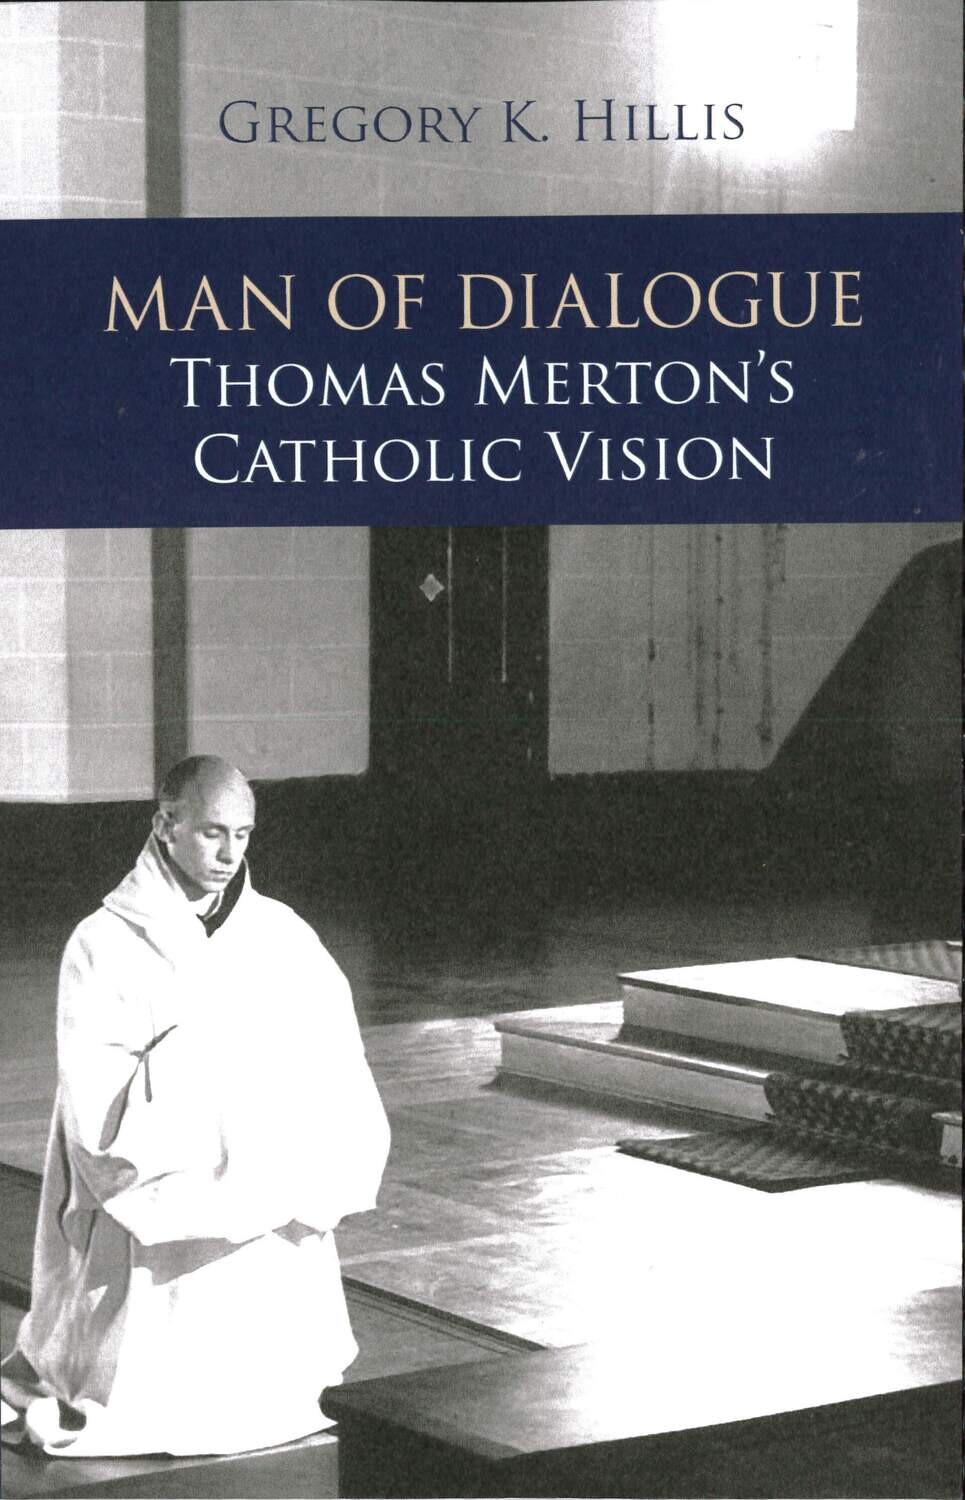 Man of Dialogue: Thomas Merton’s Catholic Vision by Gregory K.Hillis